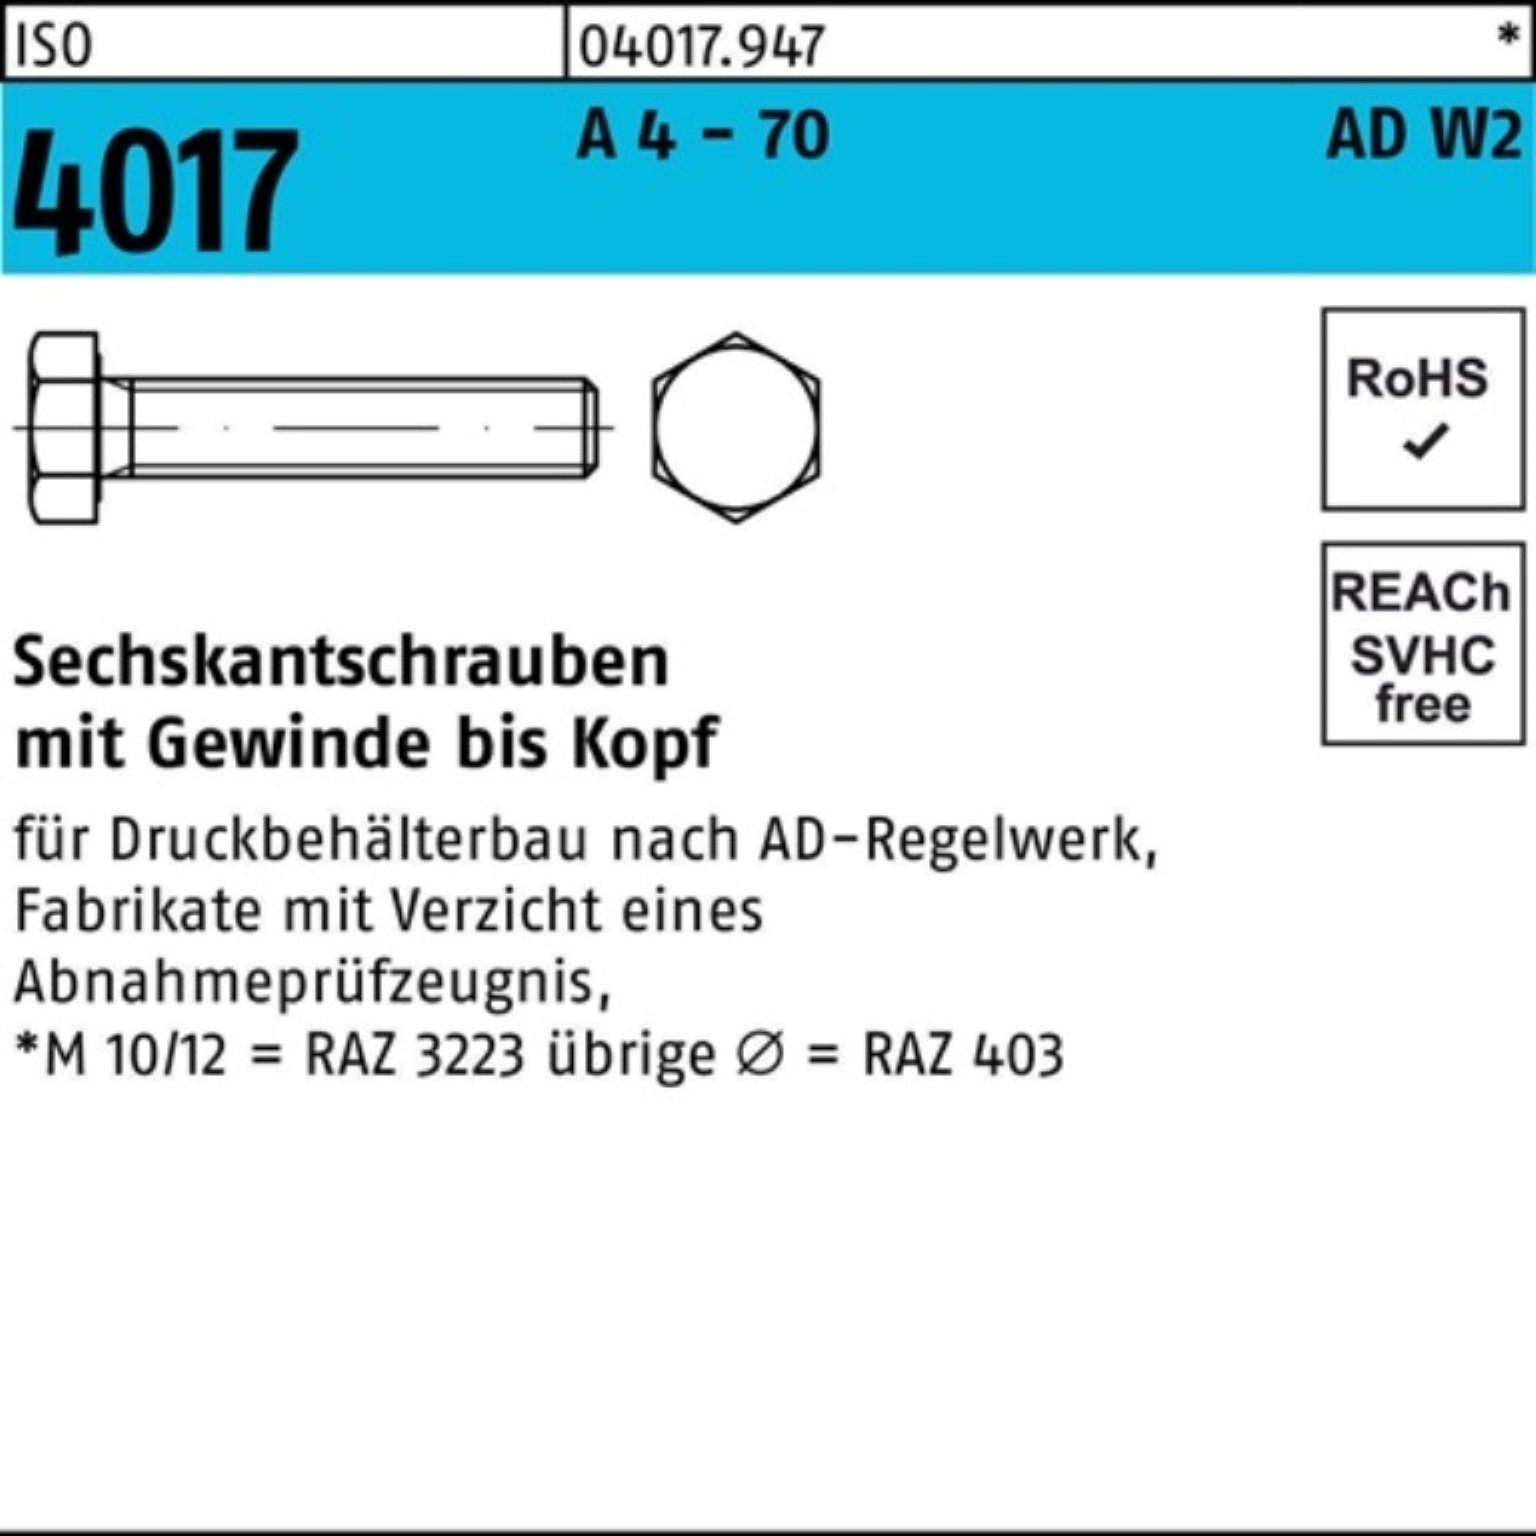 Bufab Sechskantschraube 200er Pack Sechskantschraube ISO 4017 VG M8x 25 A 4 - 70 AD-W2 200 St